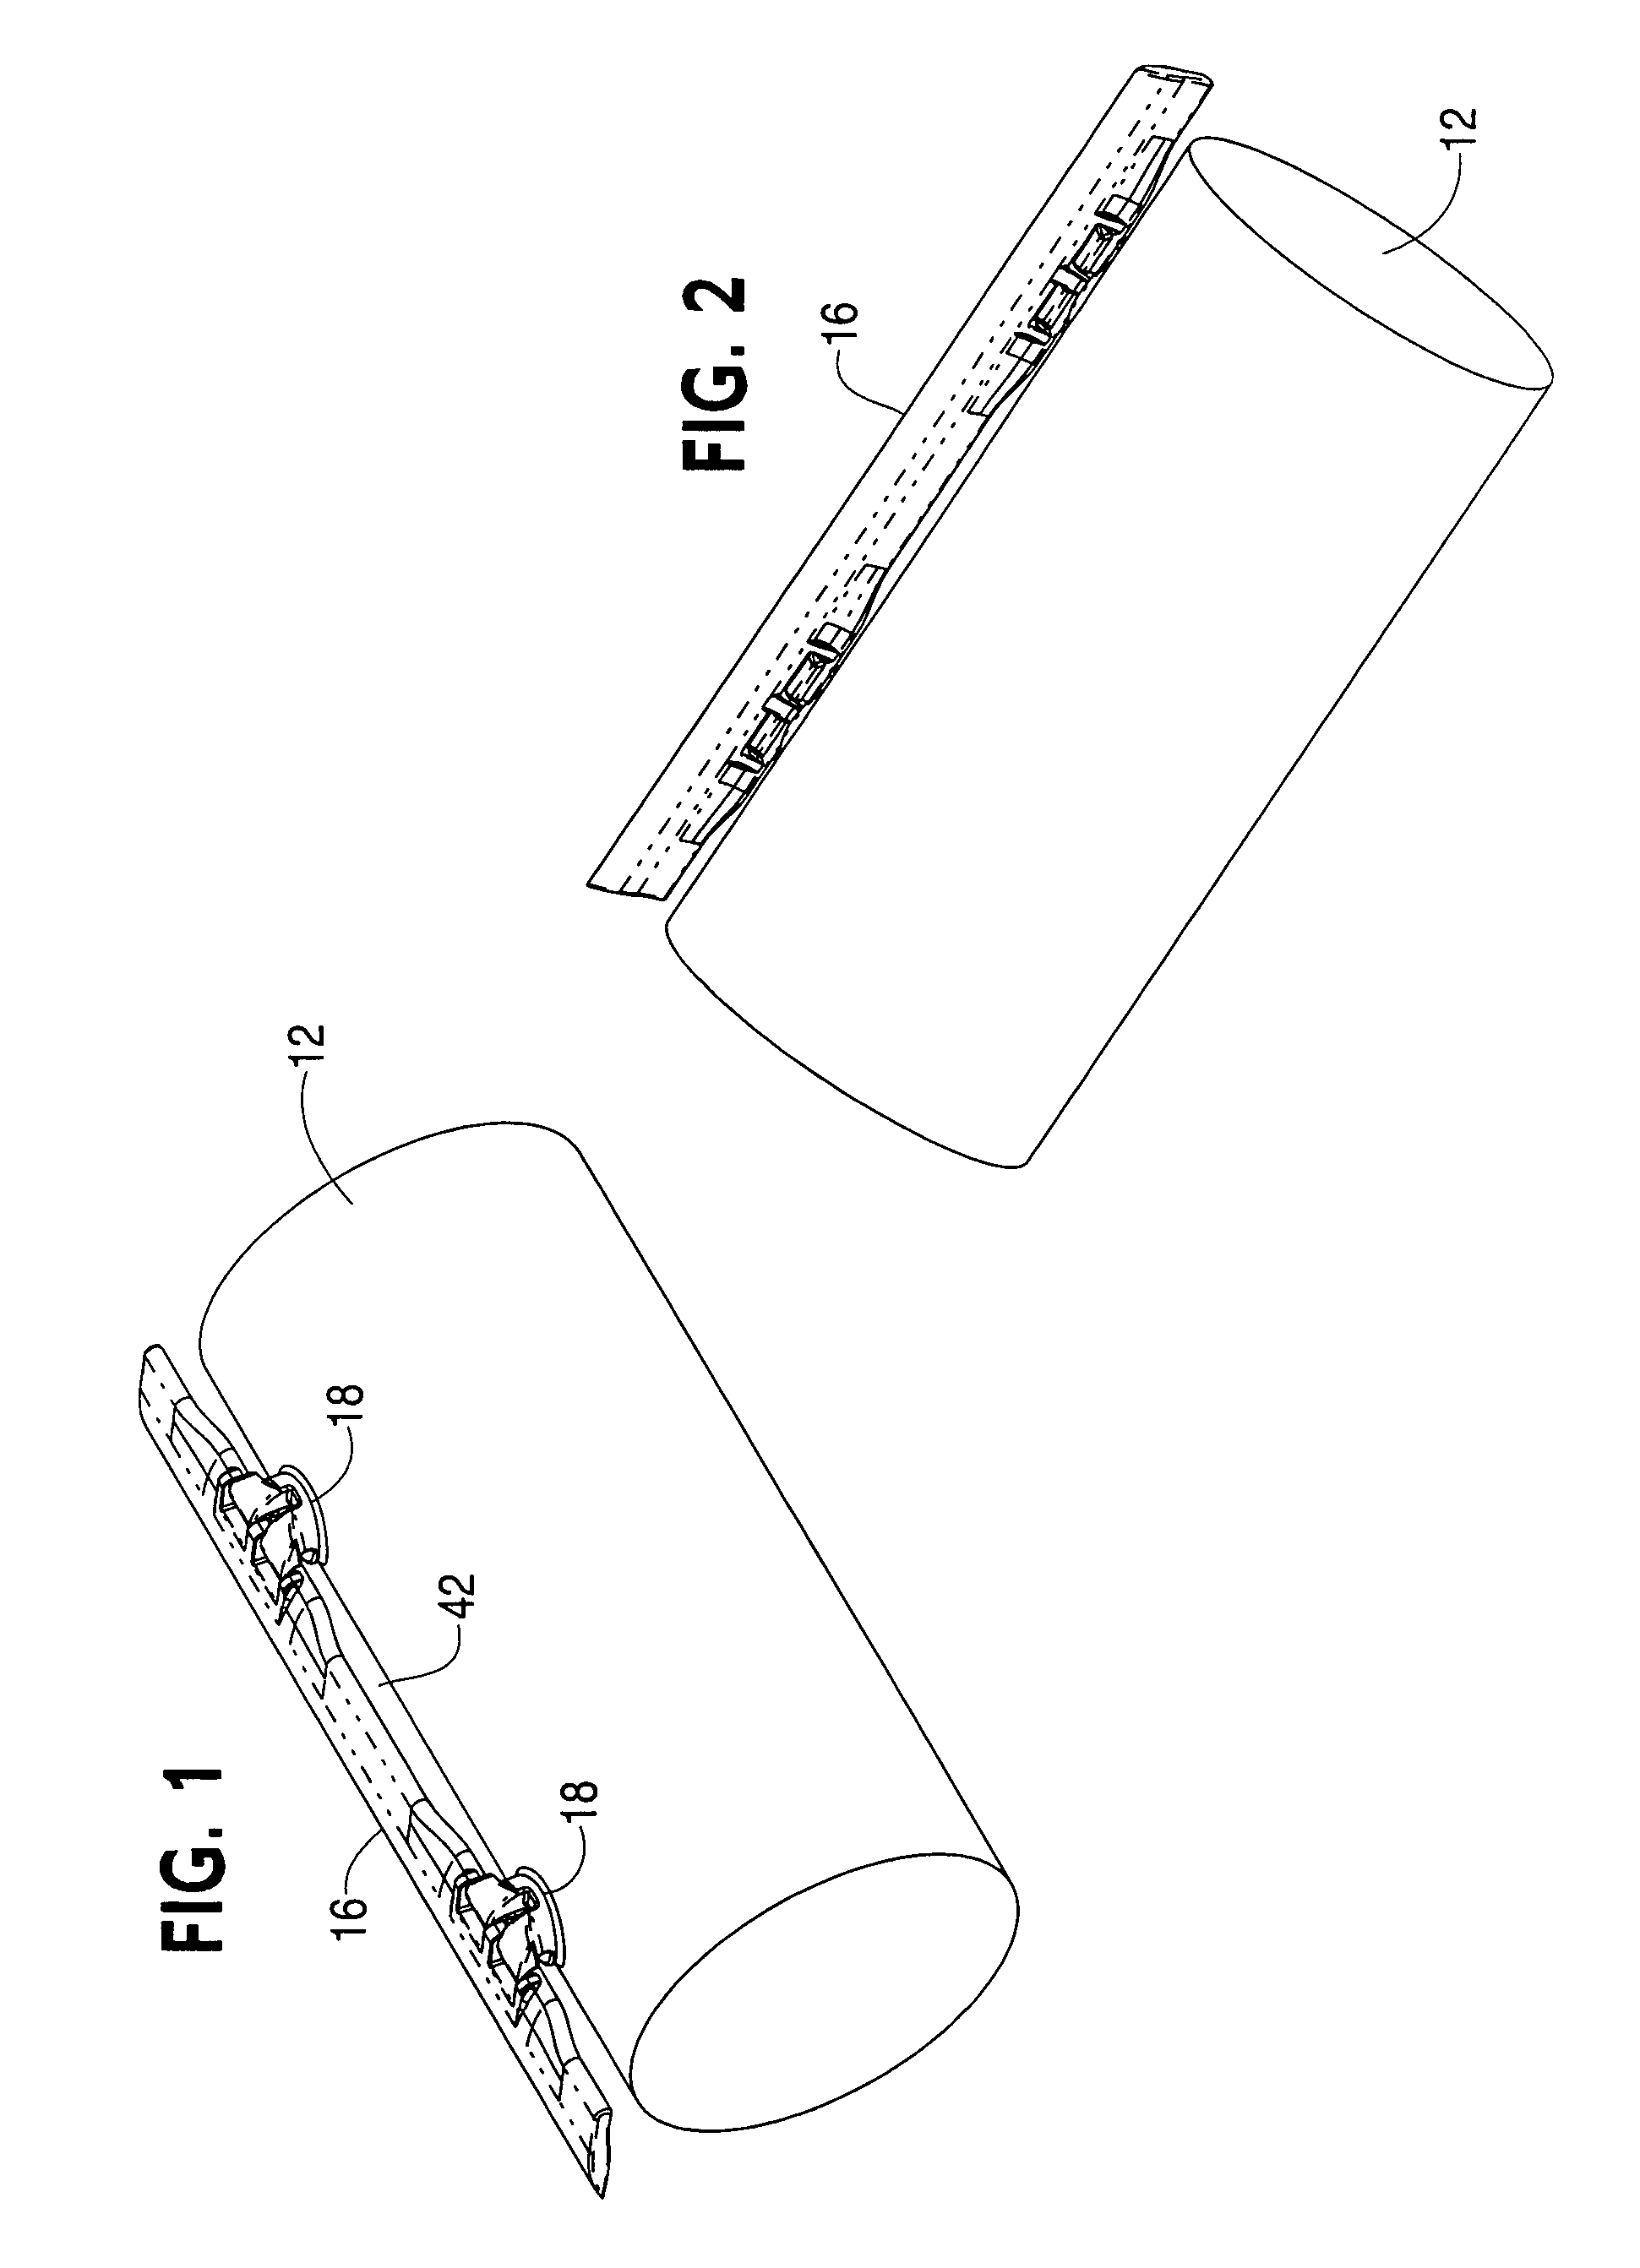 Scraper blade attachment apparatus and method with split pin